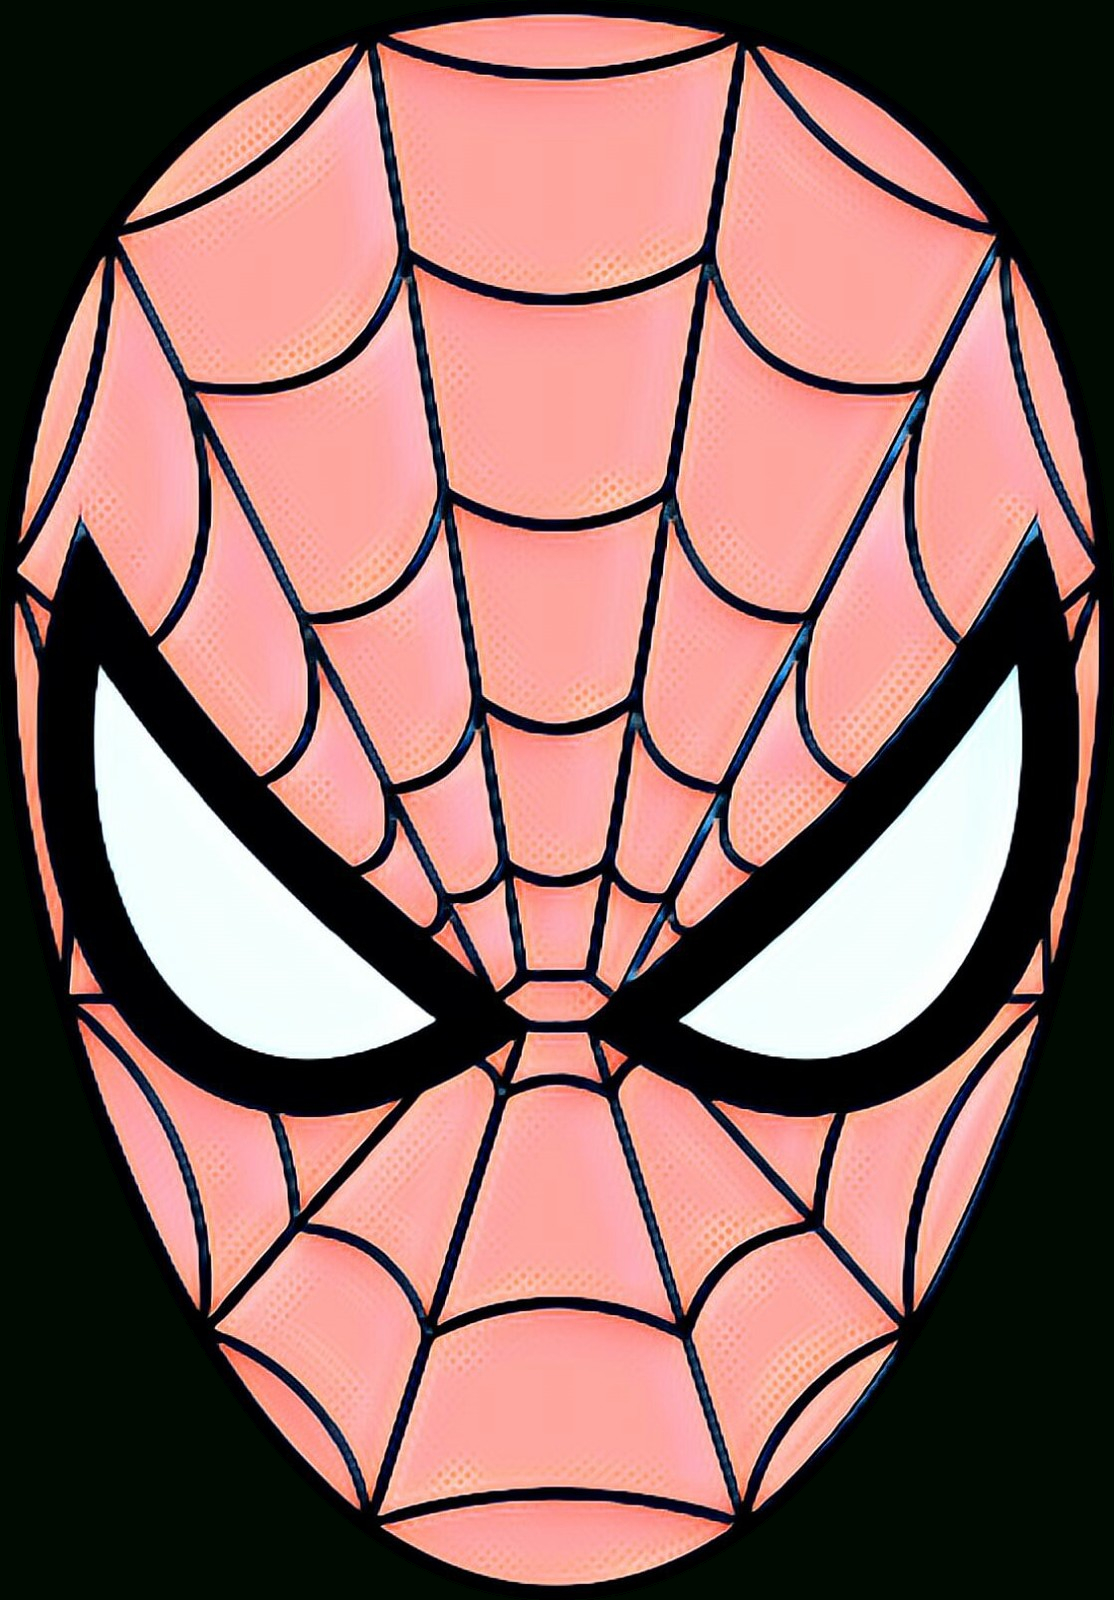 Spider-Man Drawing Coloring Book Mask Superhero - Png concernant Masque Spiderman A Imprimer